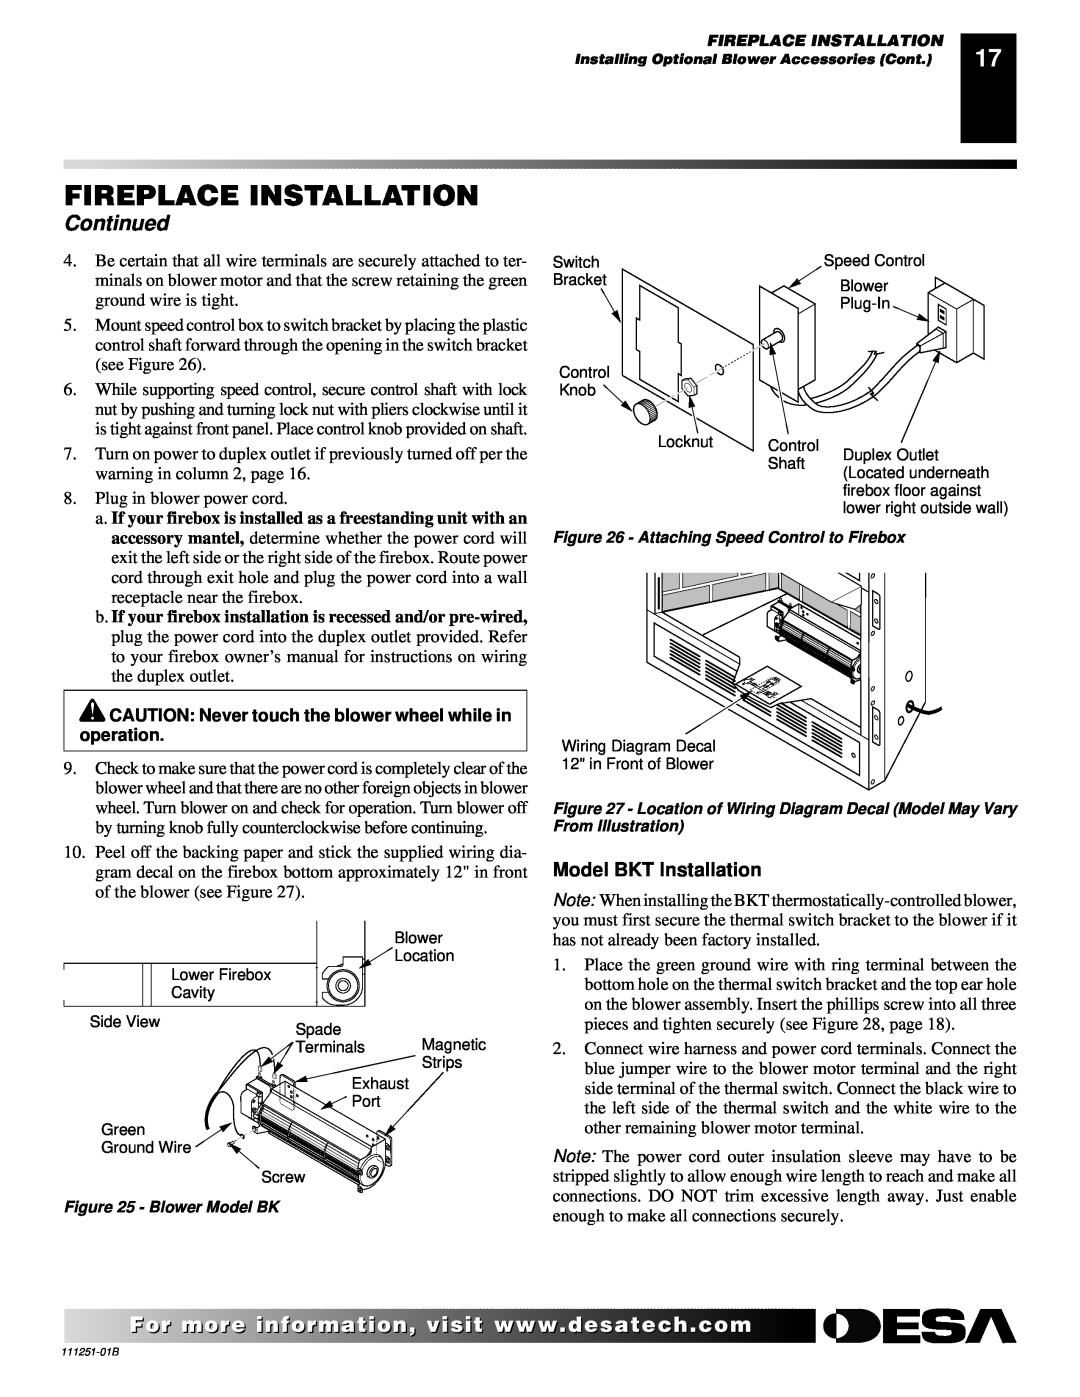 Desa (V)T36ENA installation manual Fireplace Installation, Continued, Model BKT Installation 